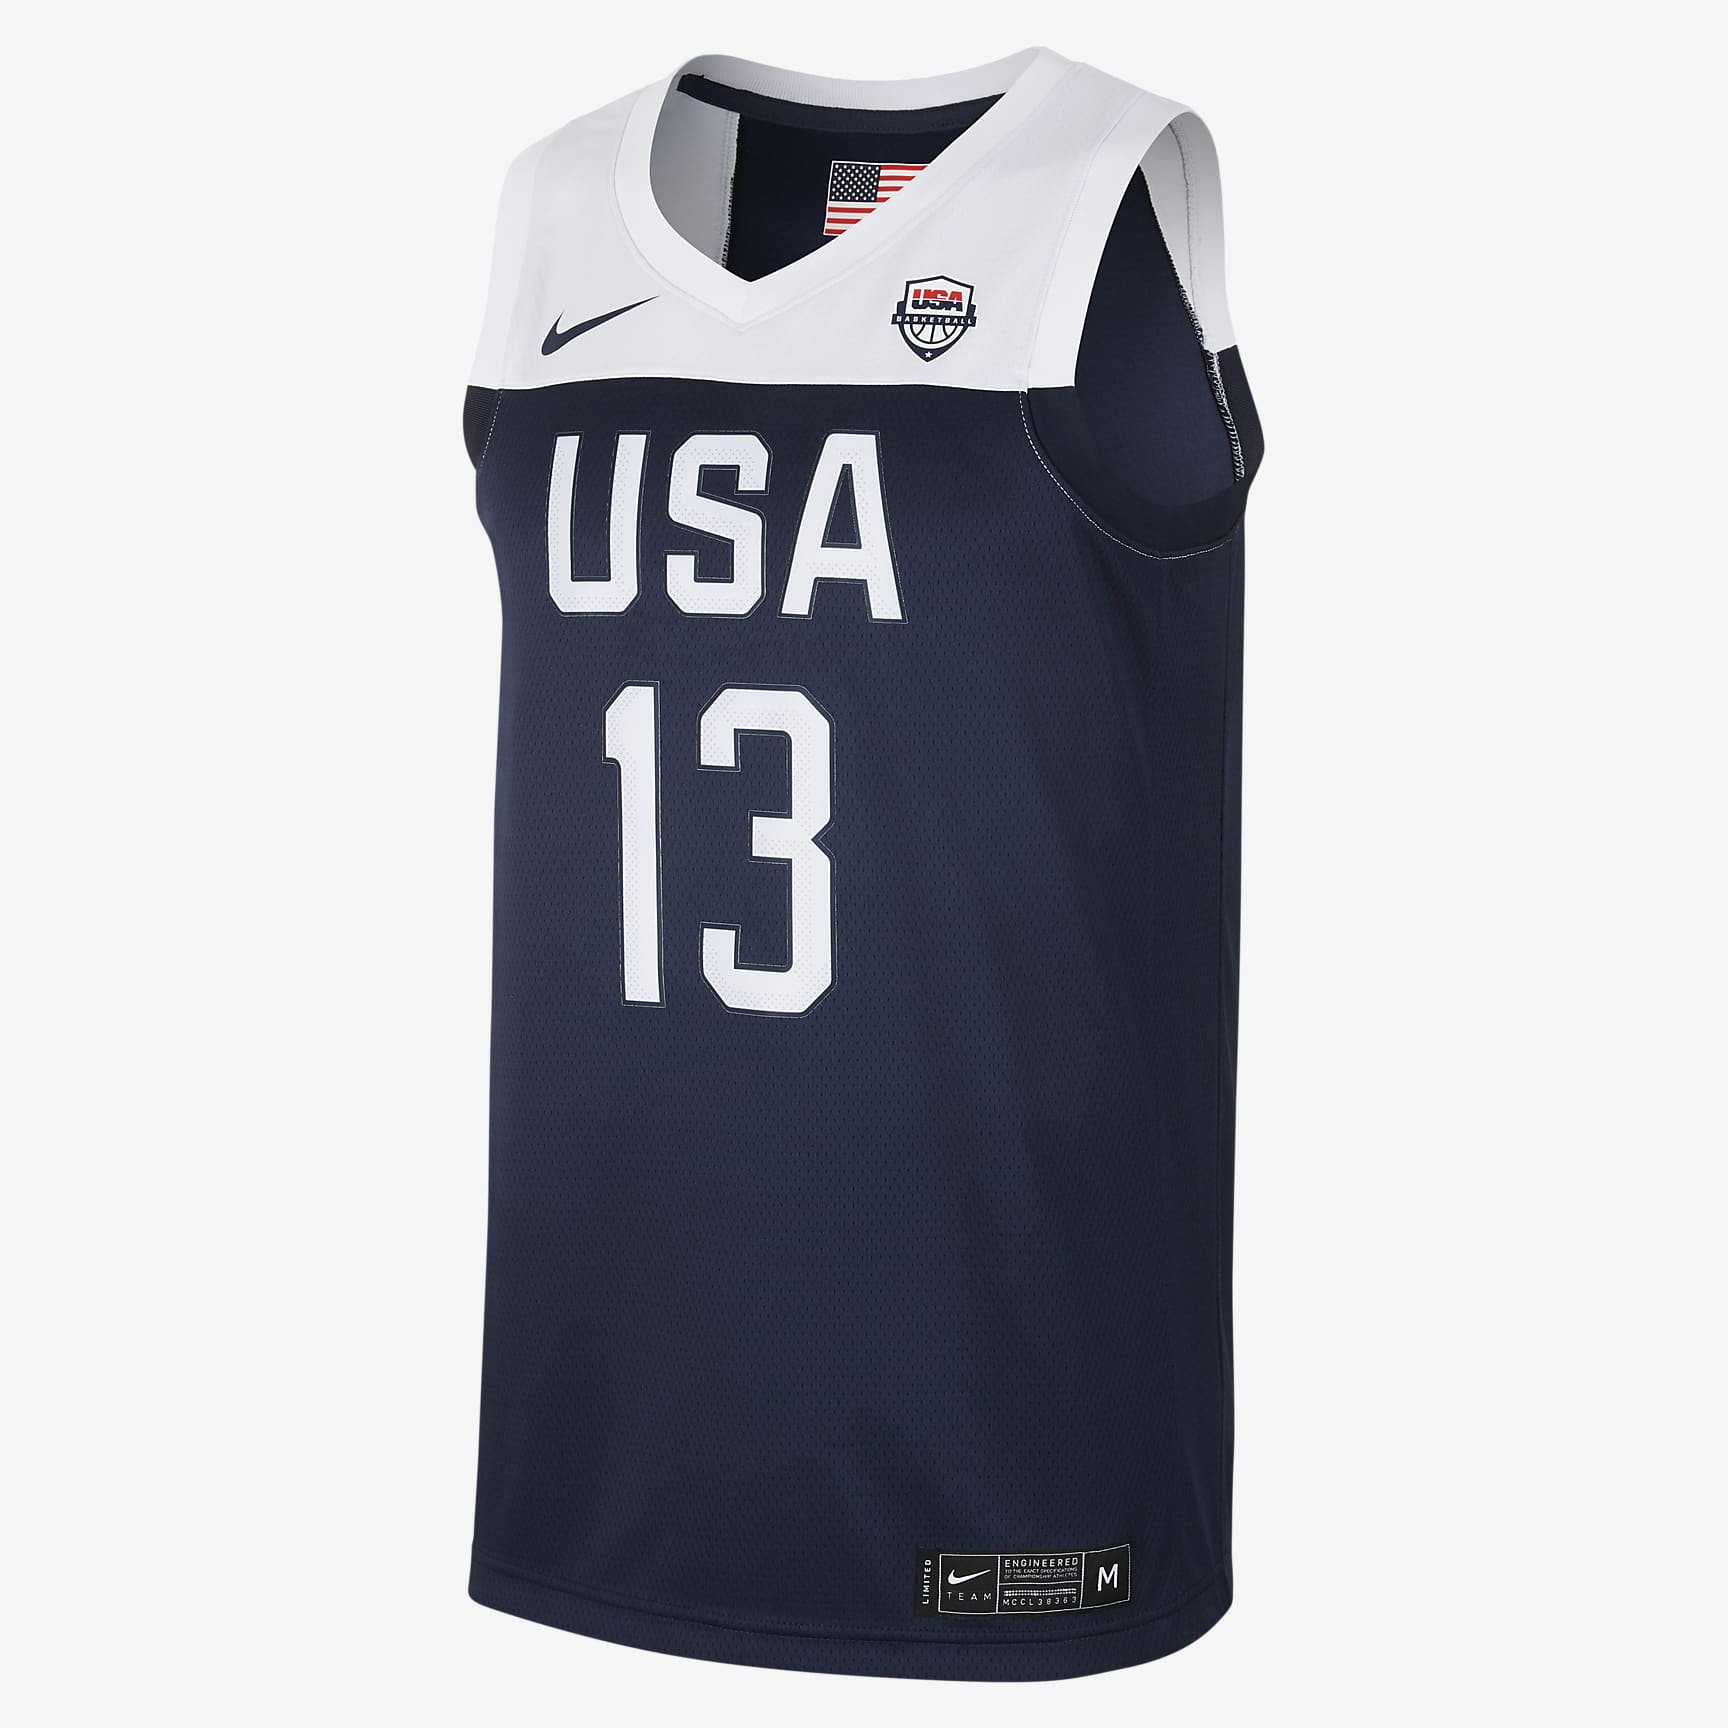 USA Nike (Road) Men's Basketball Jersey. Nike SK